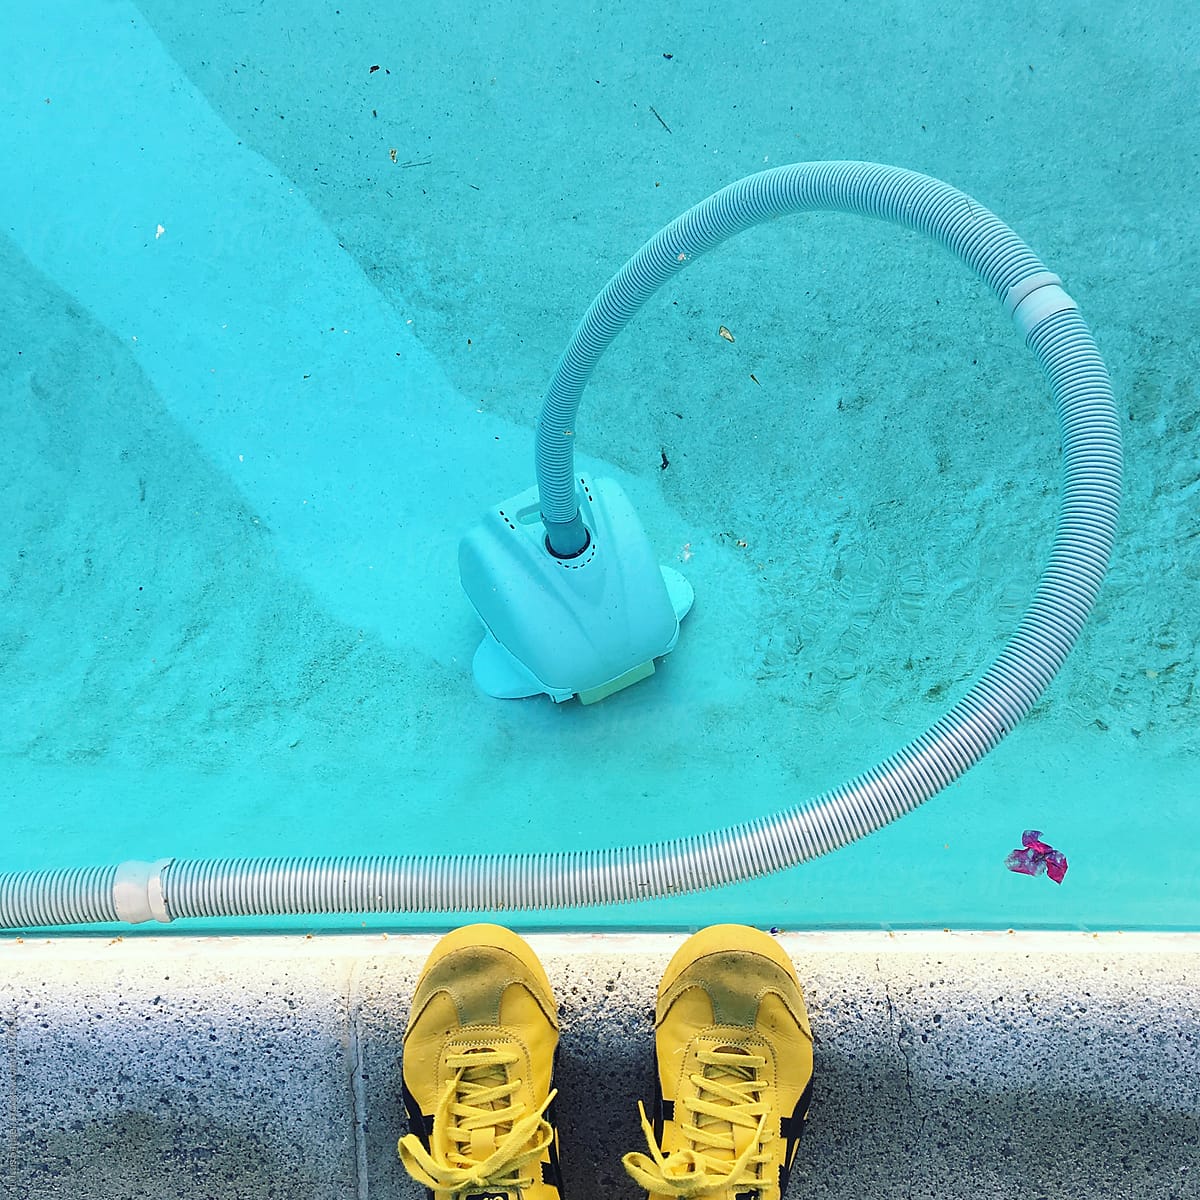 Working vacuum cleaner in swimming pool.